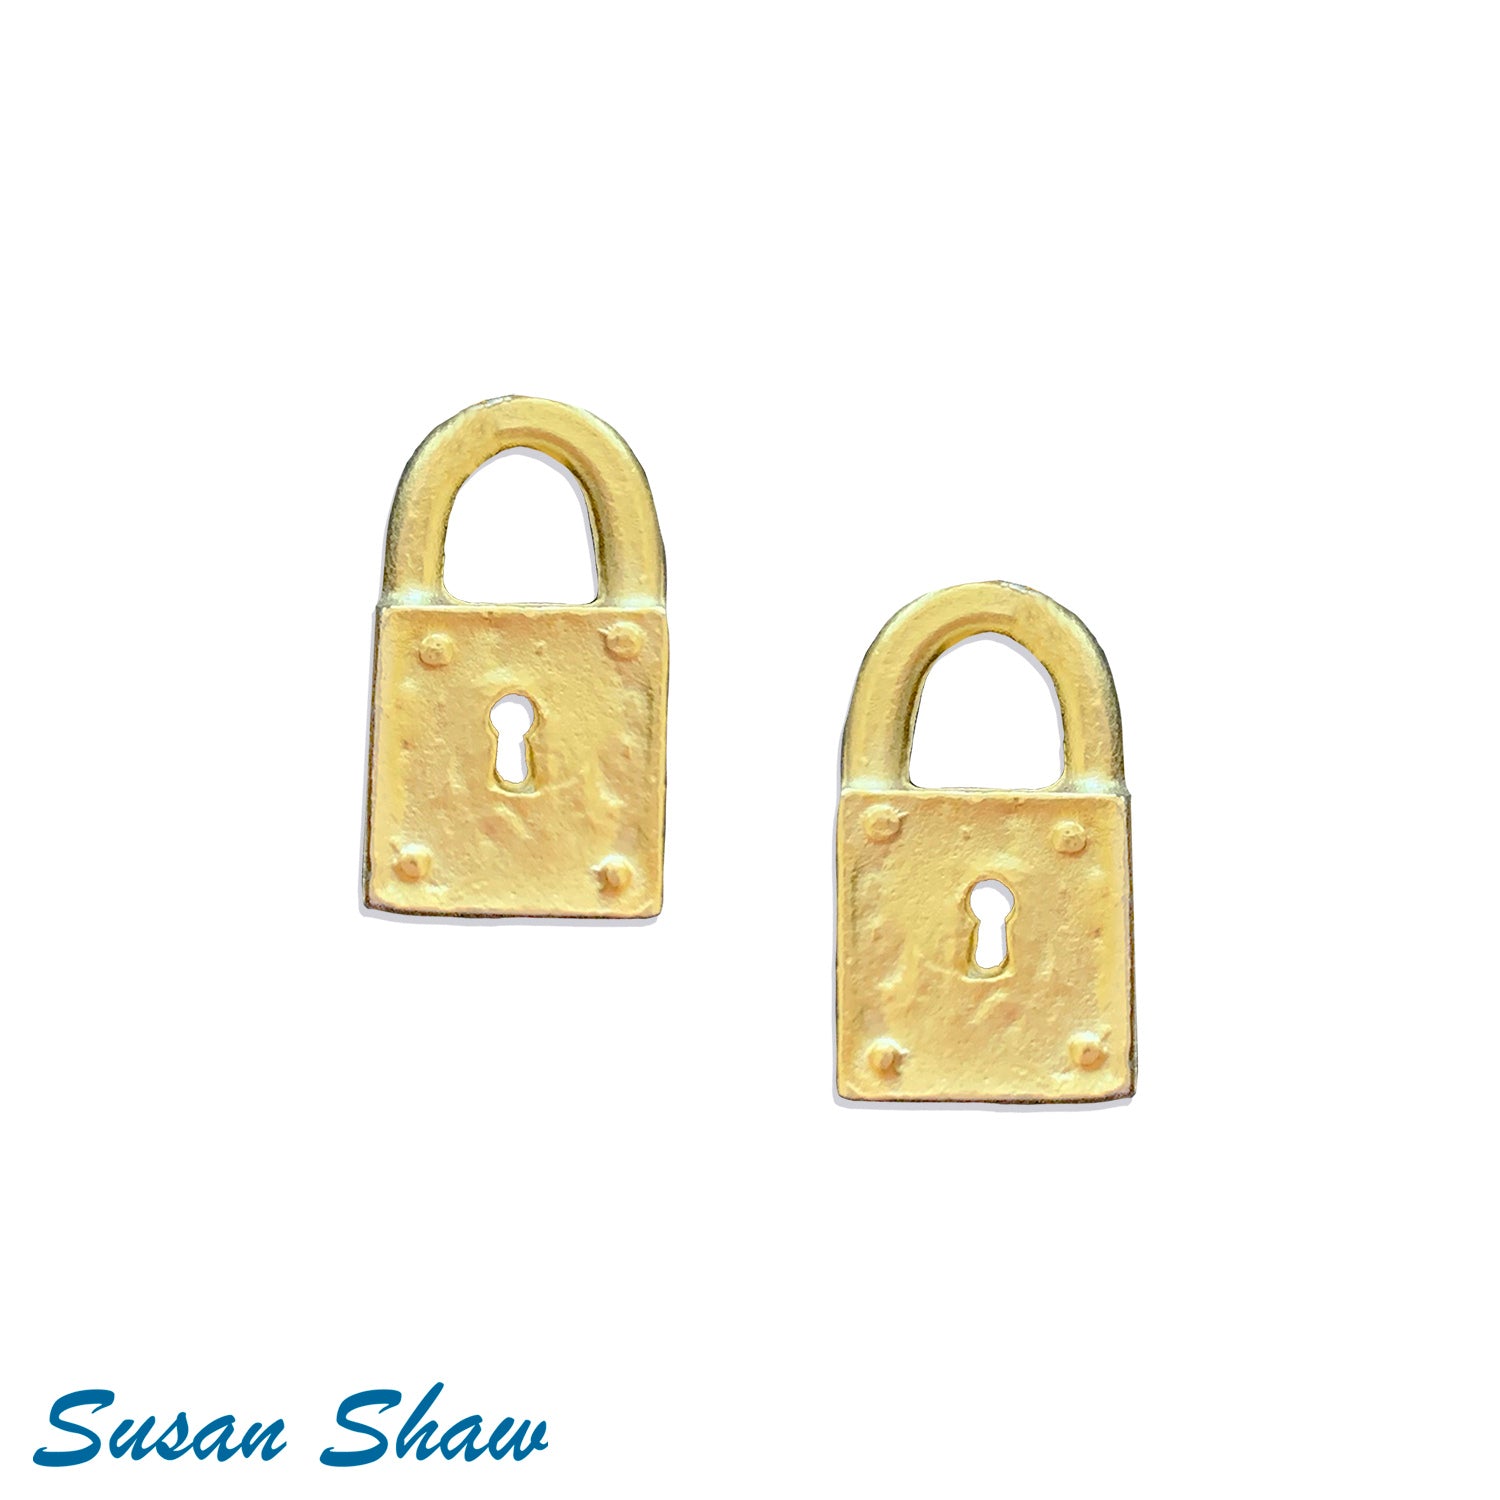 Susan Shaw Tiny Lock Earrings.